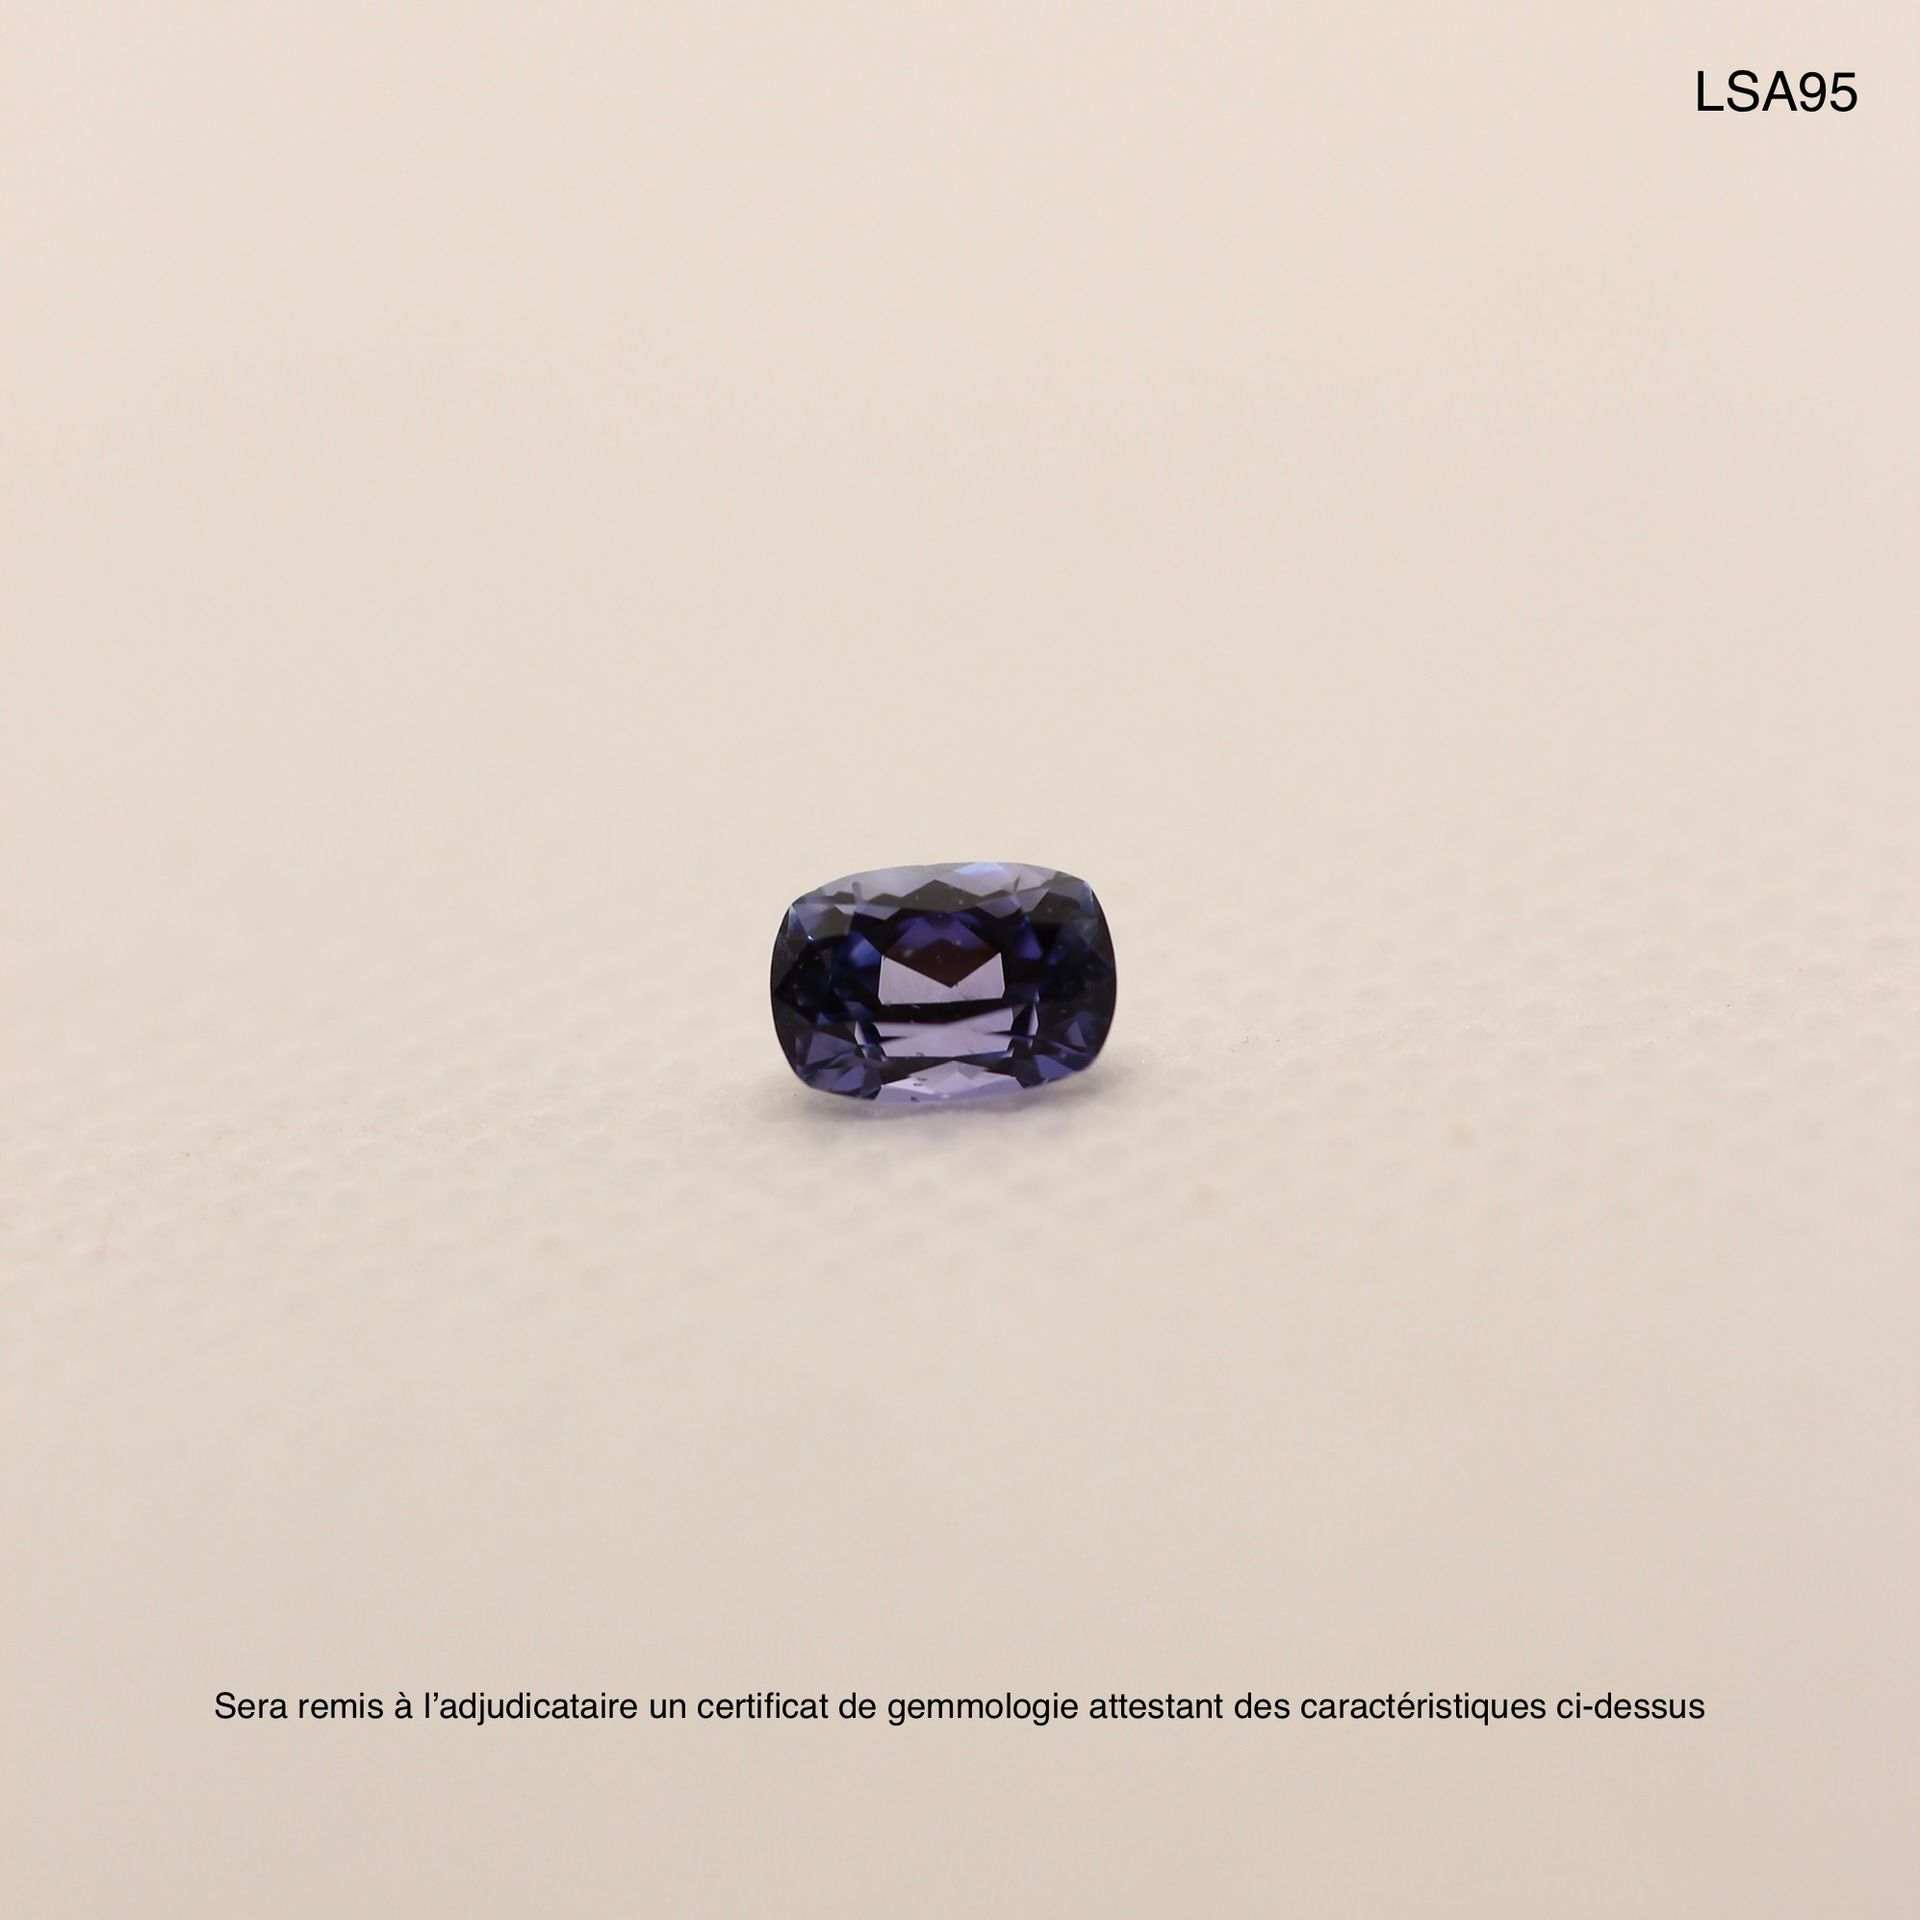 SAPHIRS TAILLÉS 拍品编号：LSA95

原产地: 马达加斯加

治疗: Ø

颜色：蓝色/紫色

形状：长方形

尺寸：5.9mm x 4.1m&hellip;